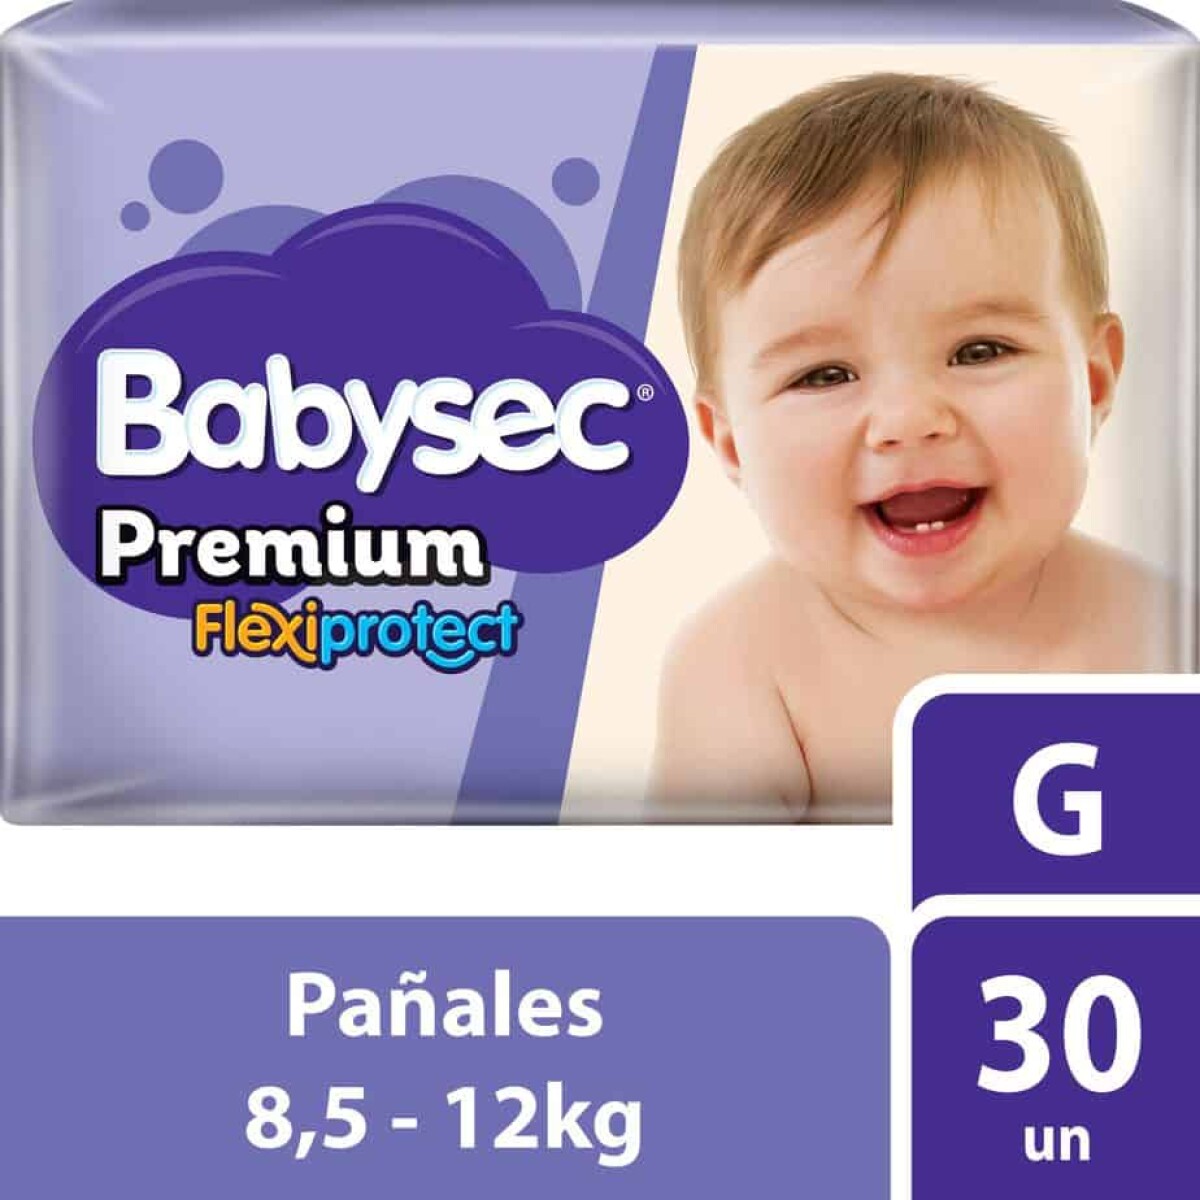 Pañales Babysec Premium G X 30 